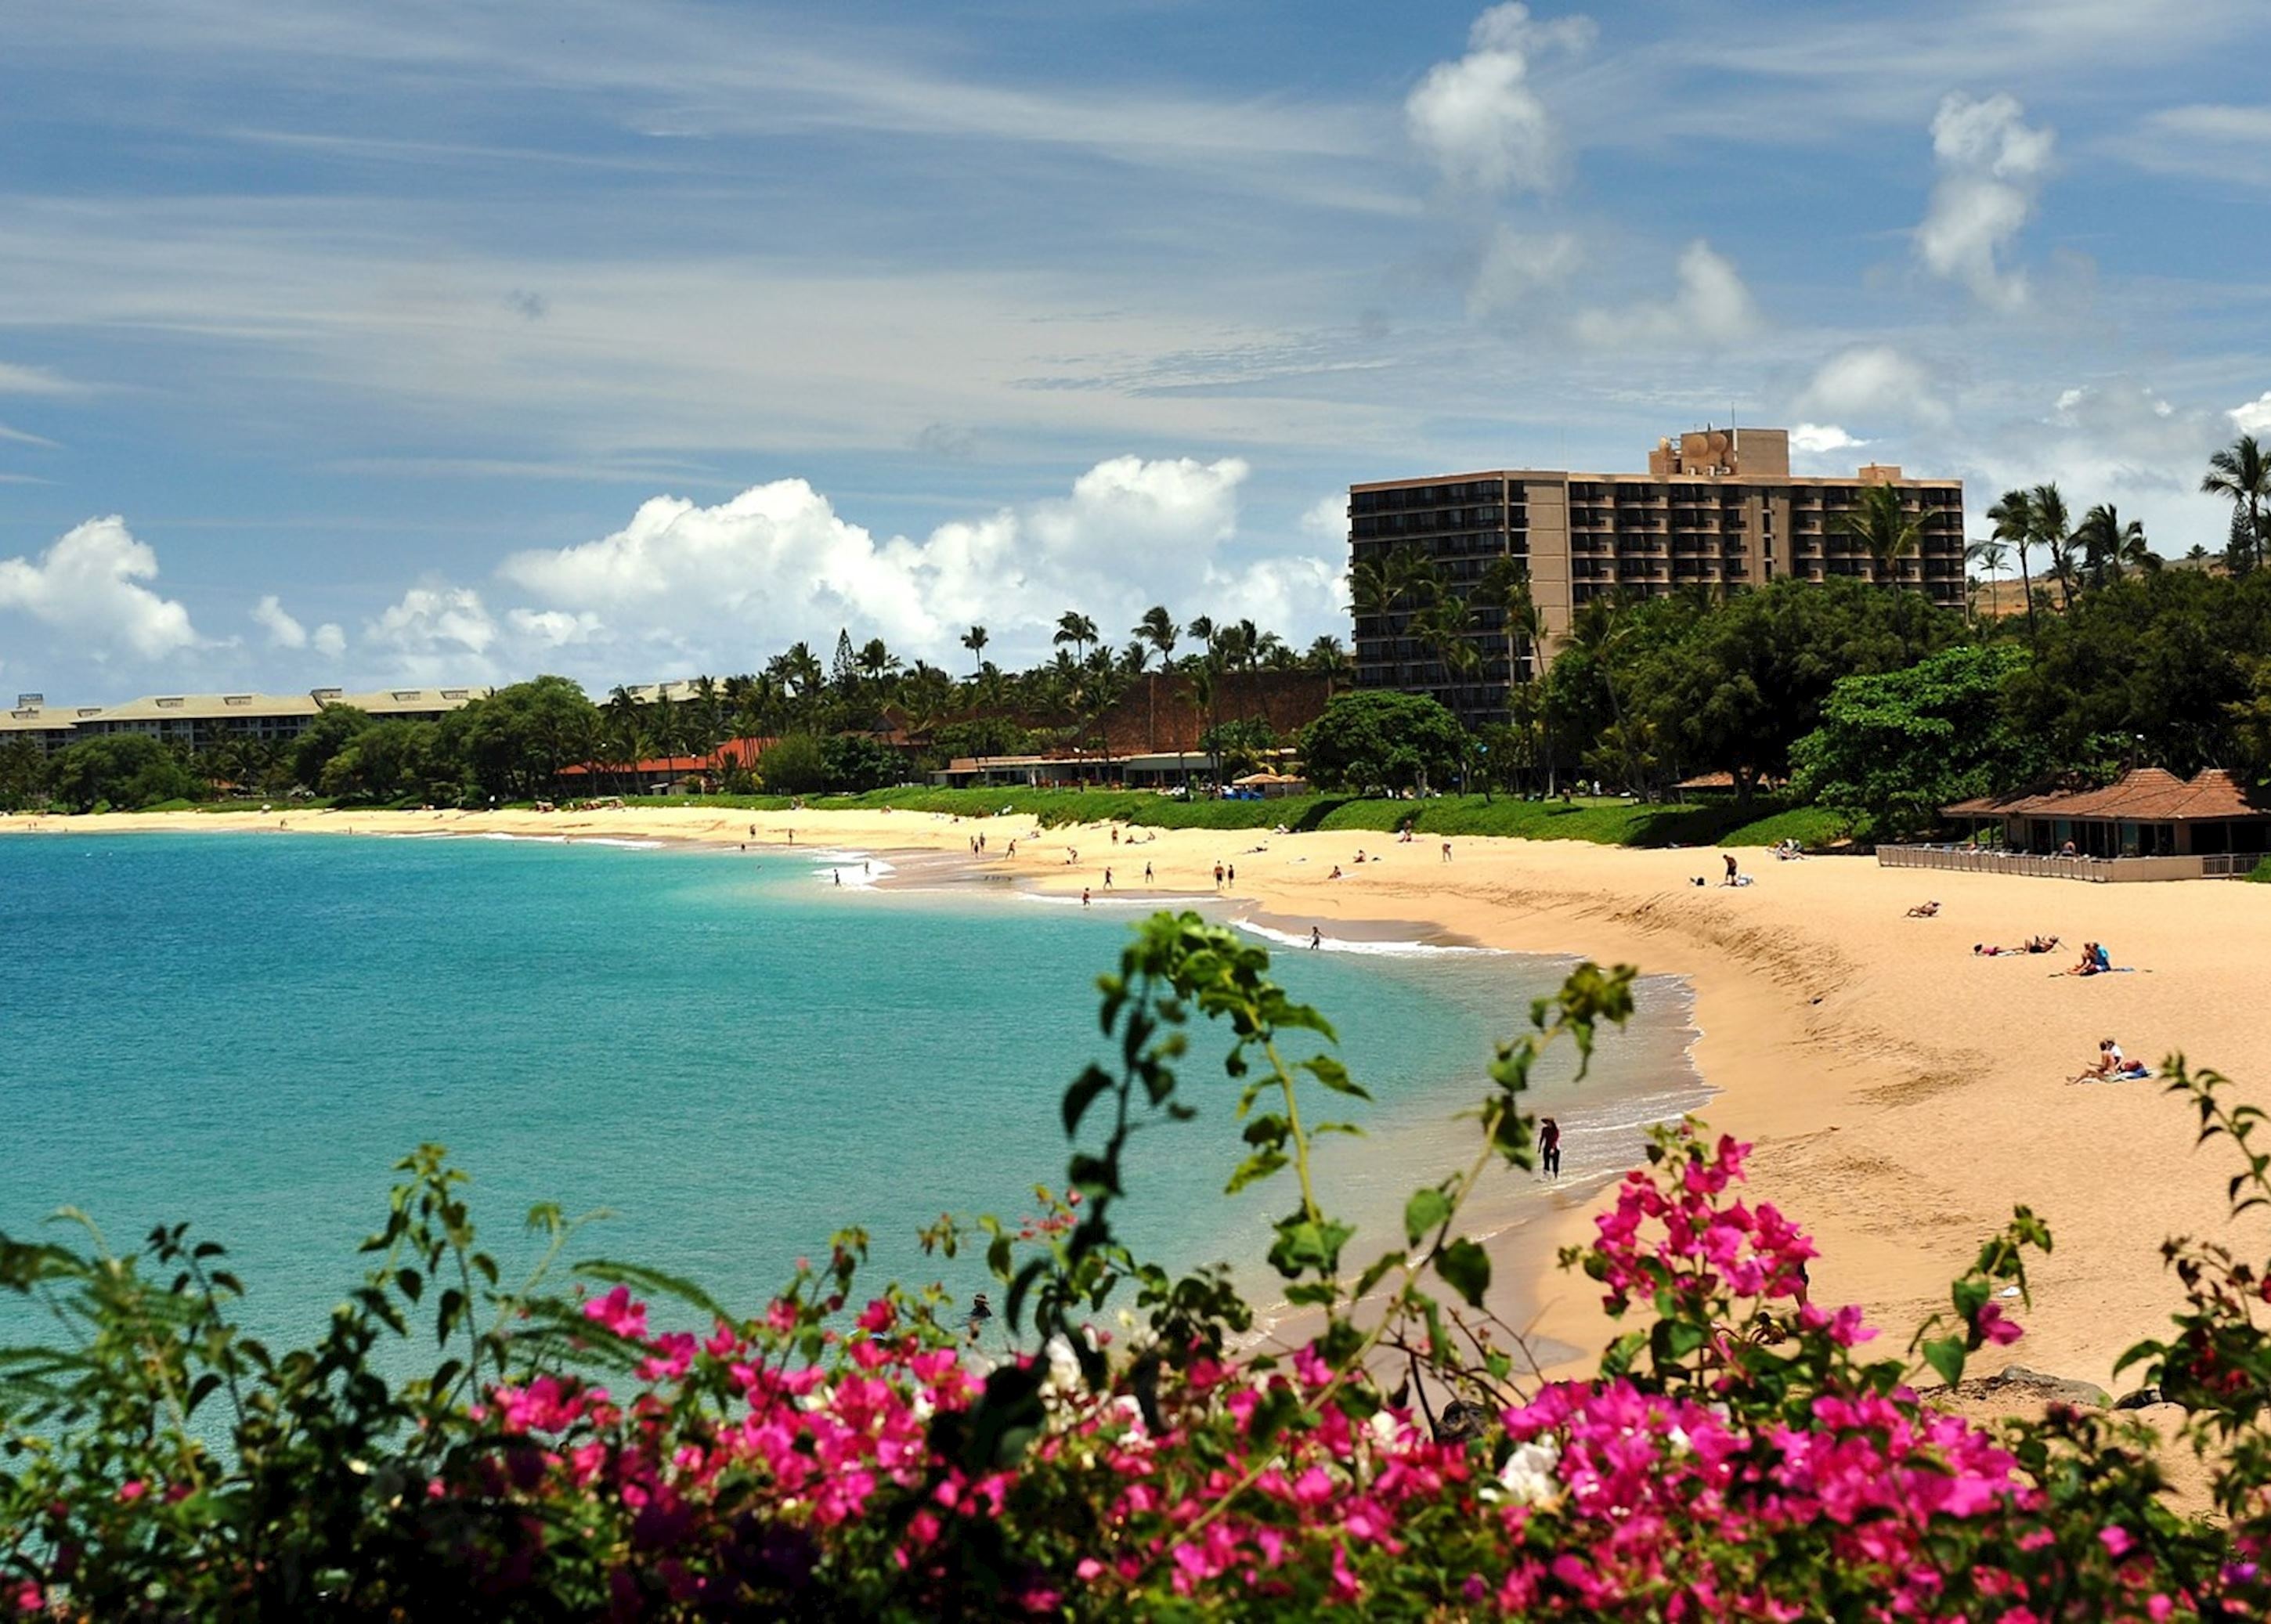 Royal Lahaina Resort, Hotels in Maui, Audley Travel, 2900x2080 HD Desktop